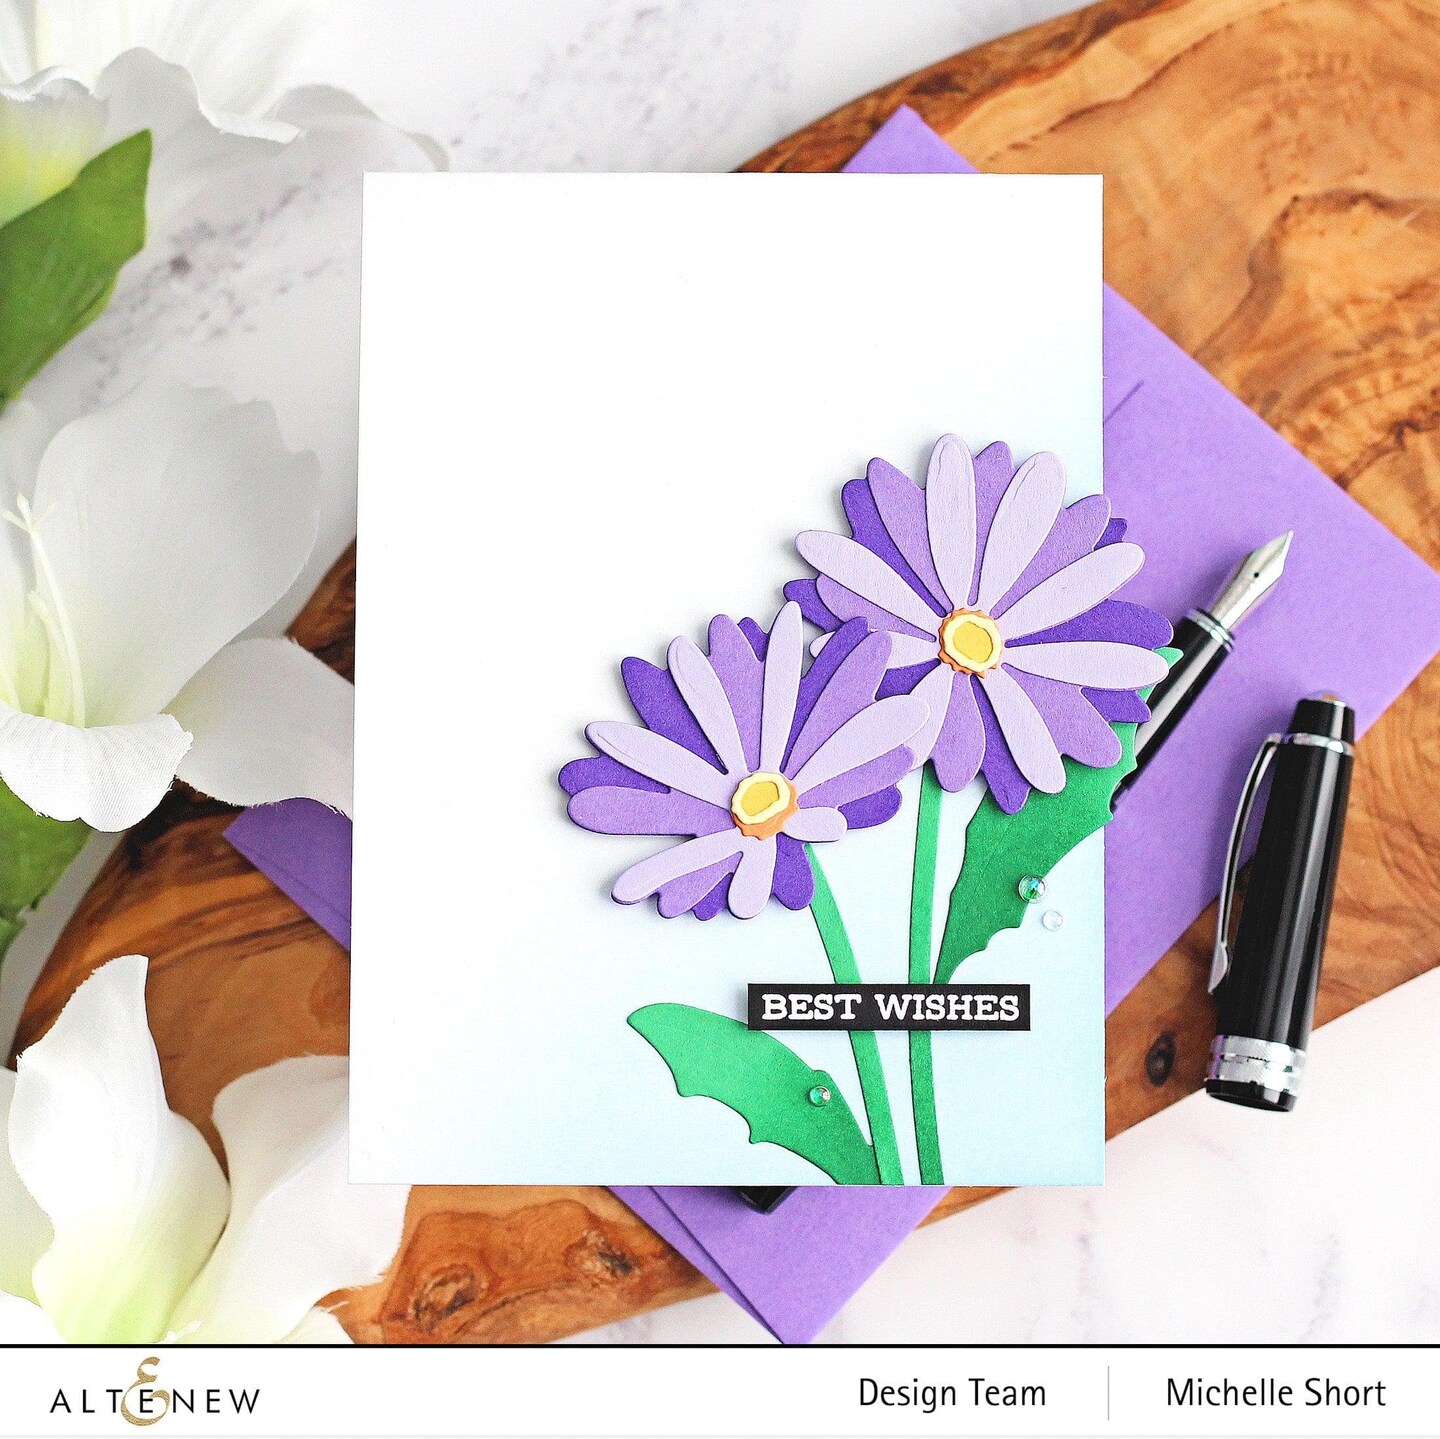 Craft-A-Flower: African Daisy Layering Die Set